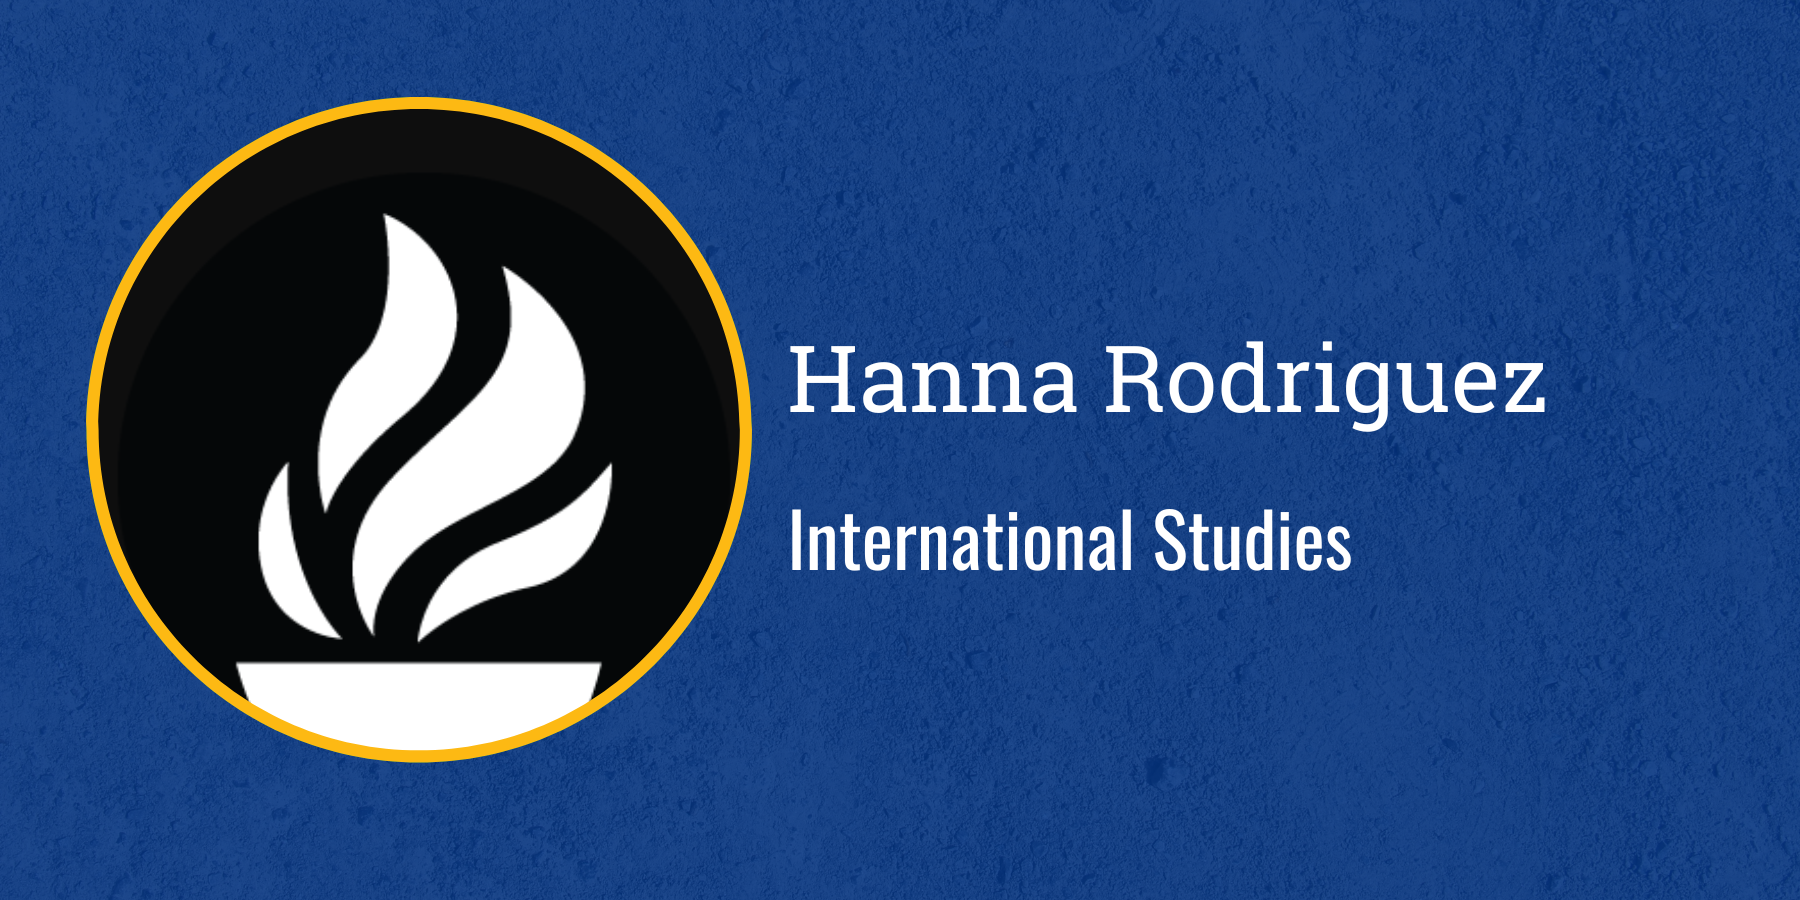 Hannah Rodriguez
International Studies 